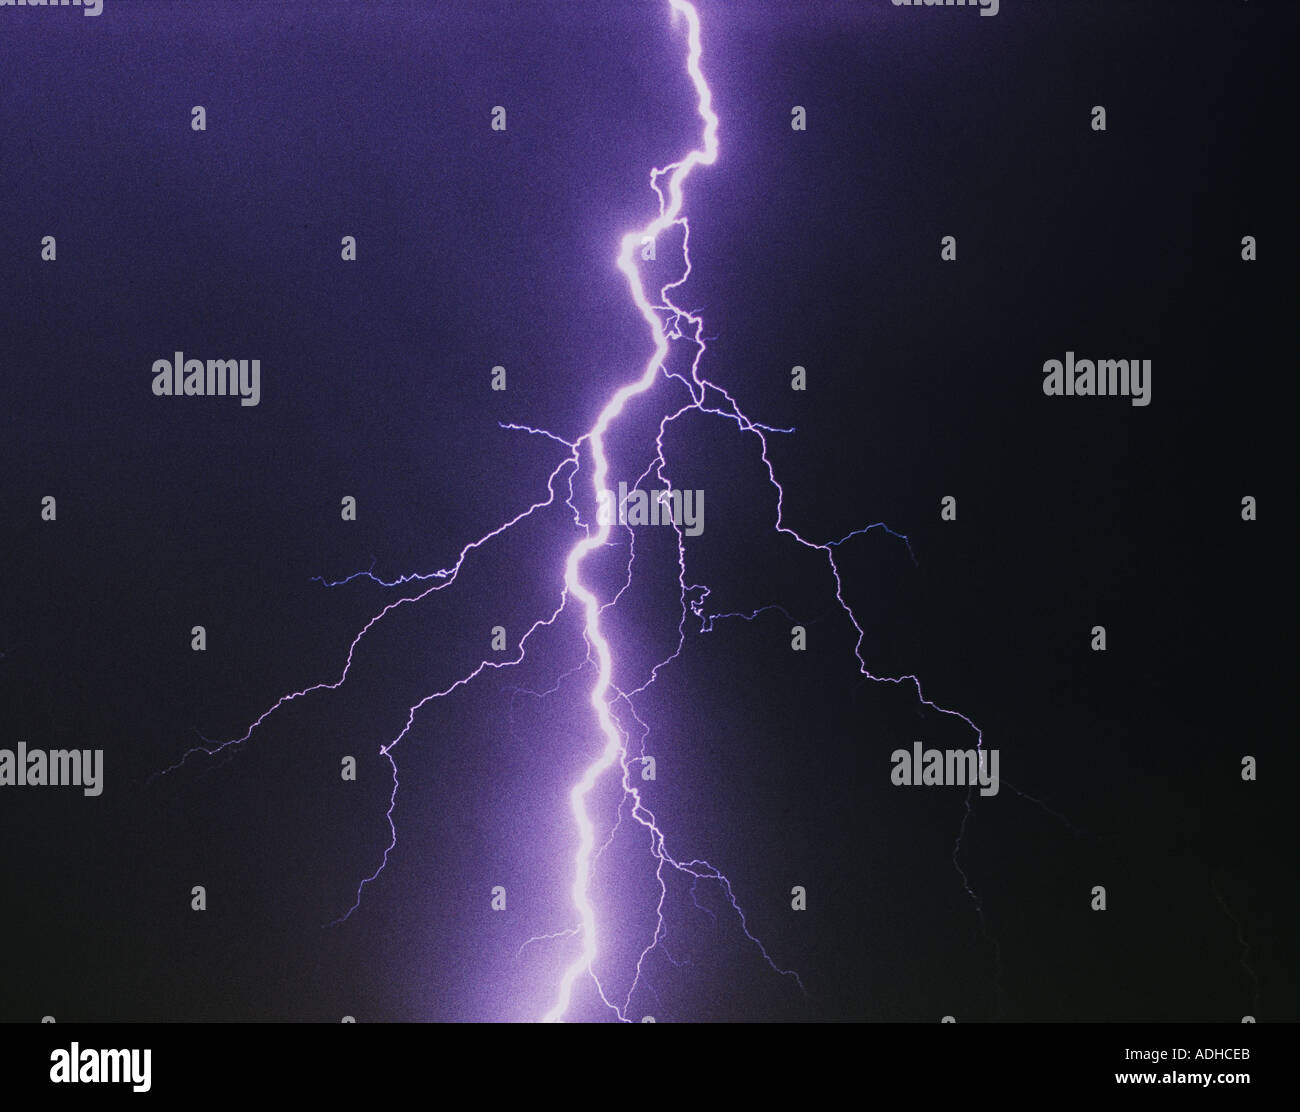 Lightning bolt splitting night sky Stock Photo